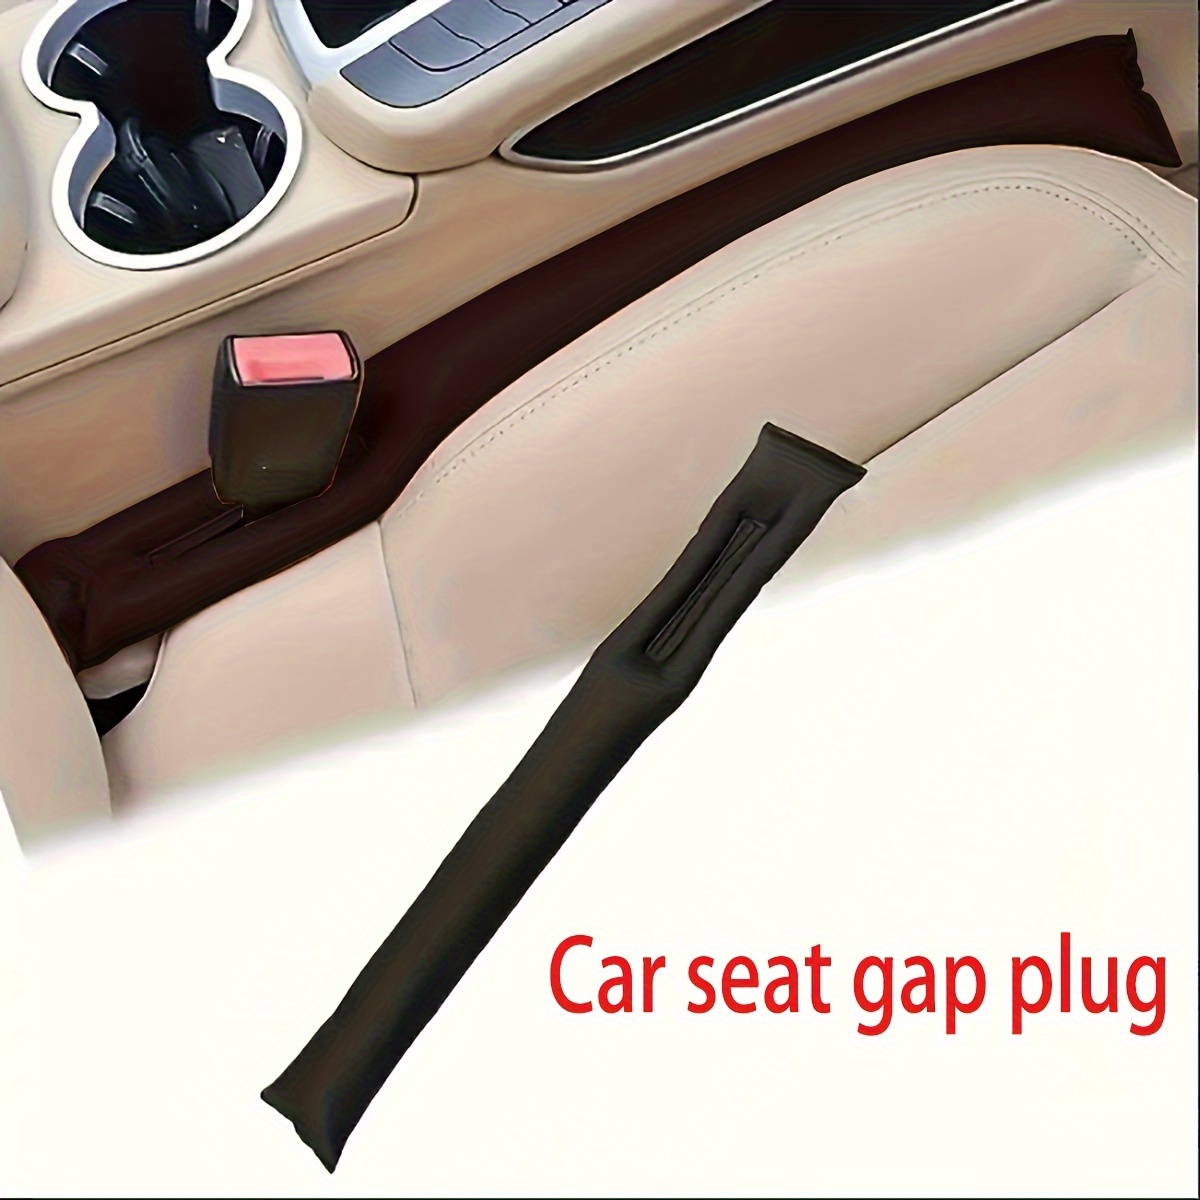 Best Car Seat Gap Filler: Drop Stop Review 2017